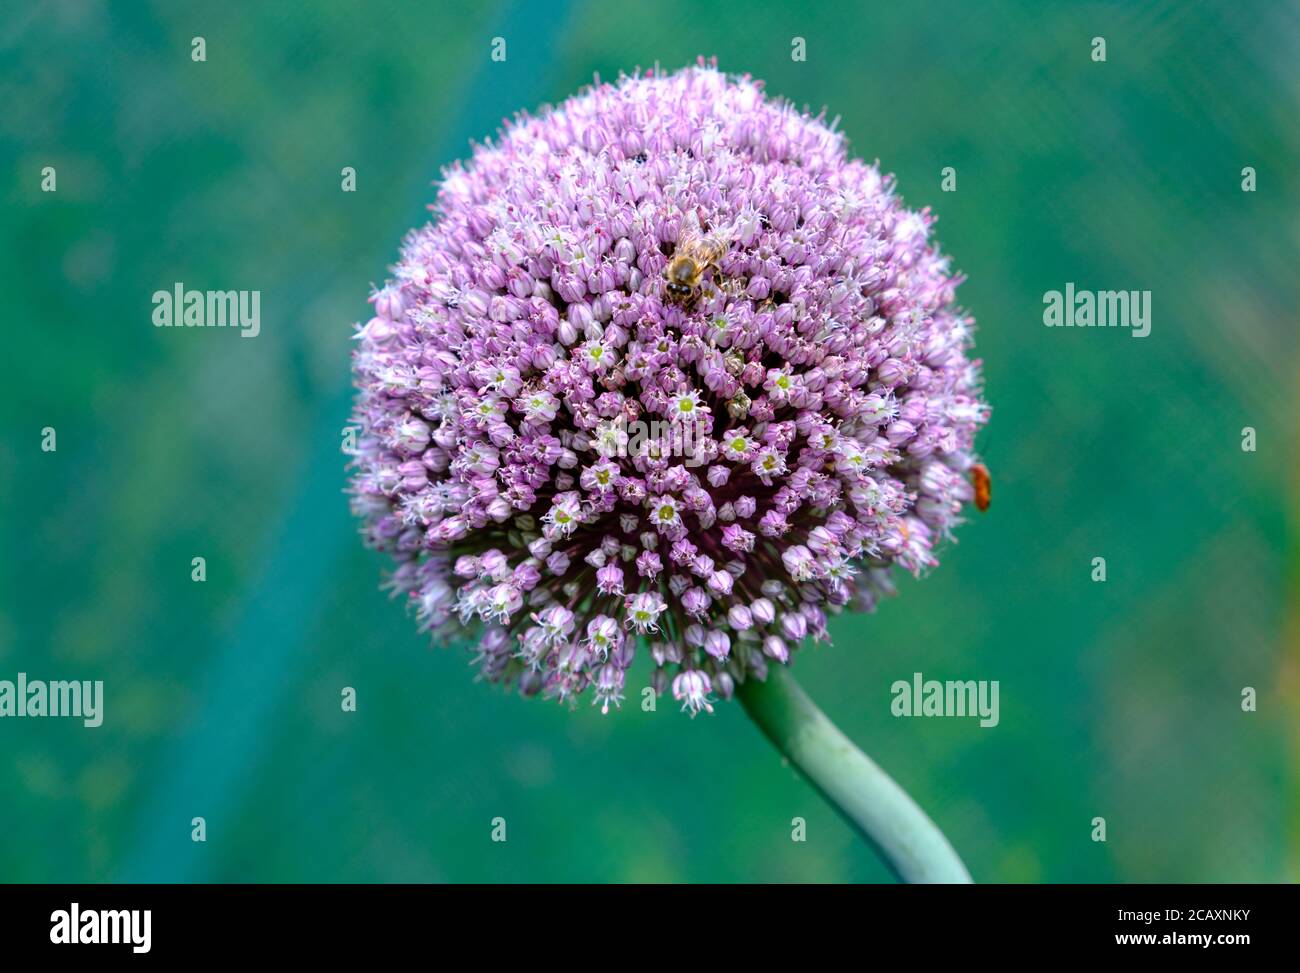 Flower of leek (Allium porrum) with honeybee Stock Photo